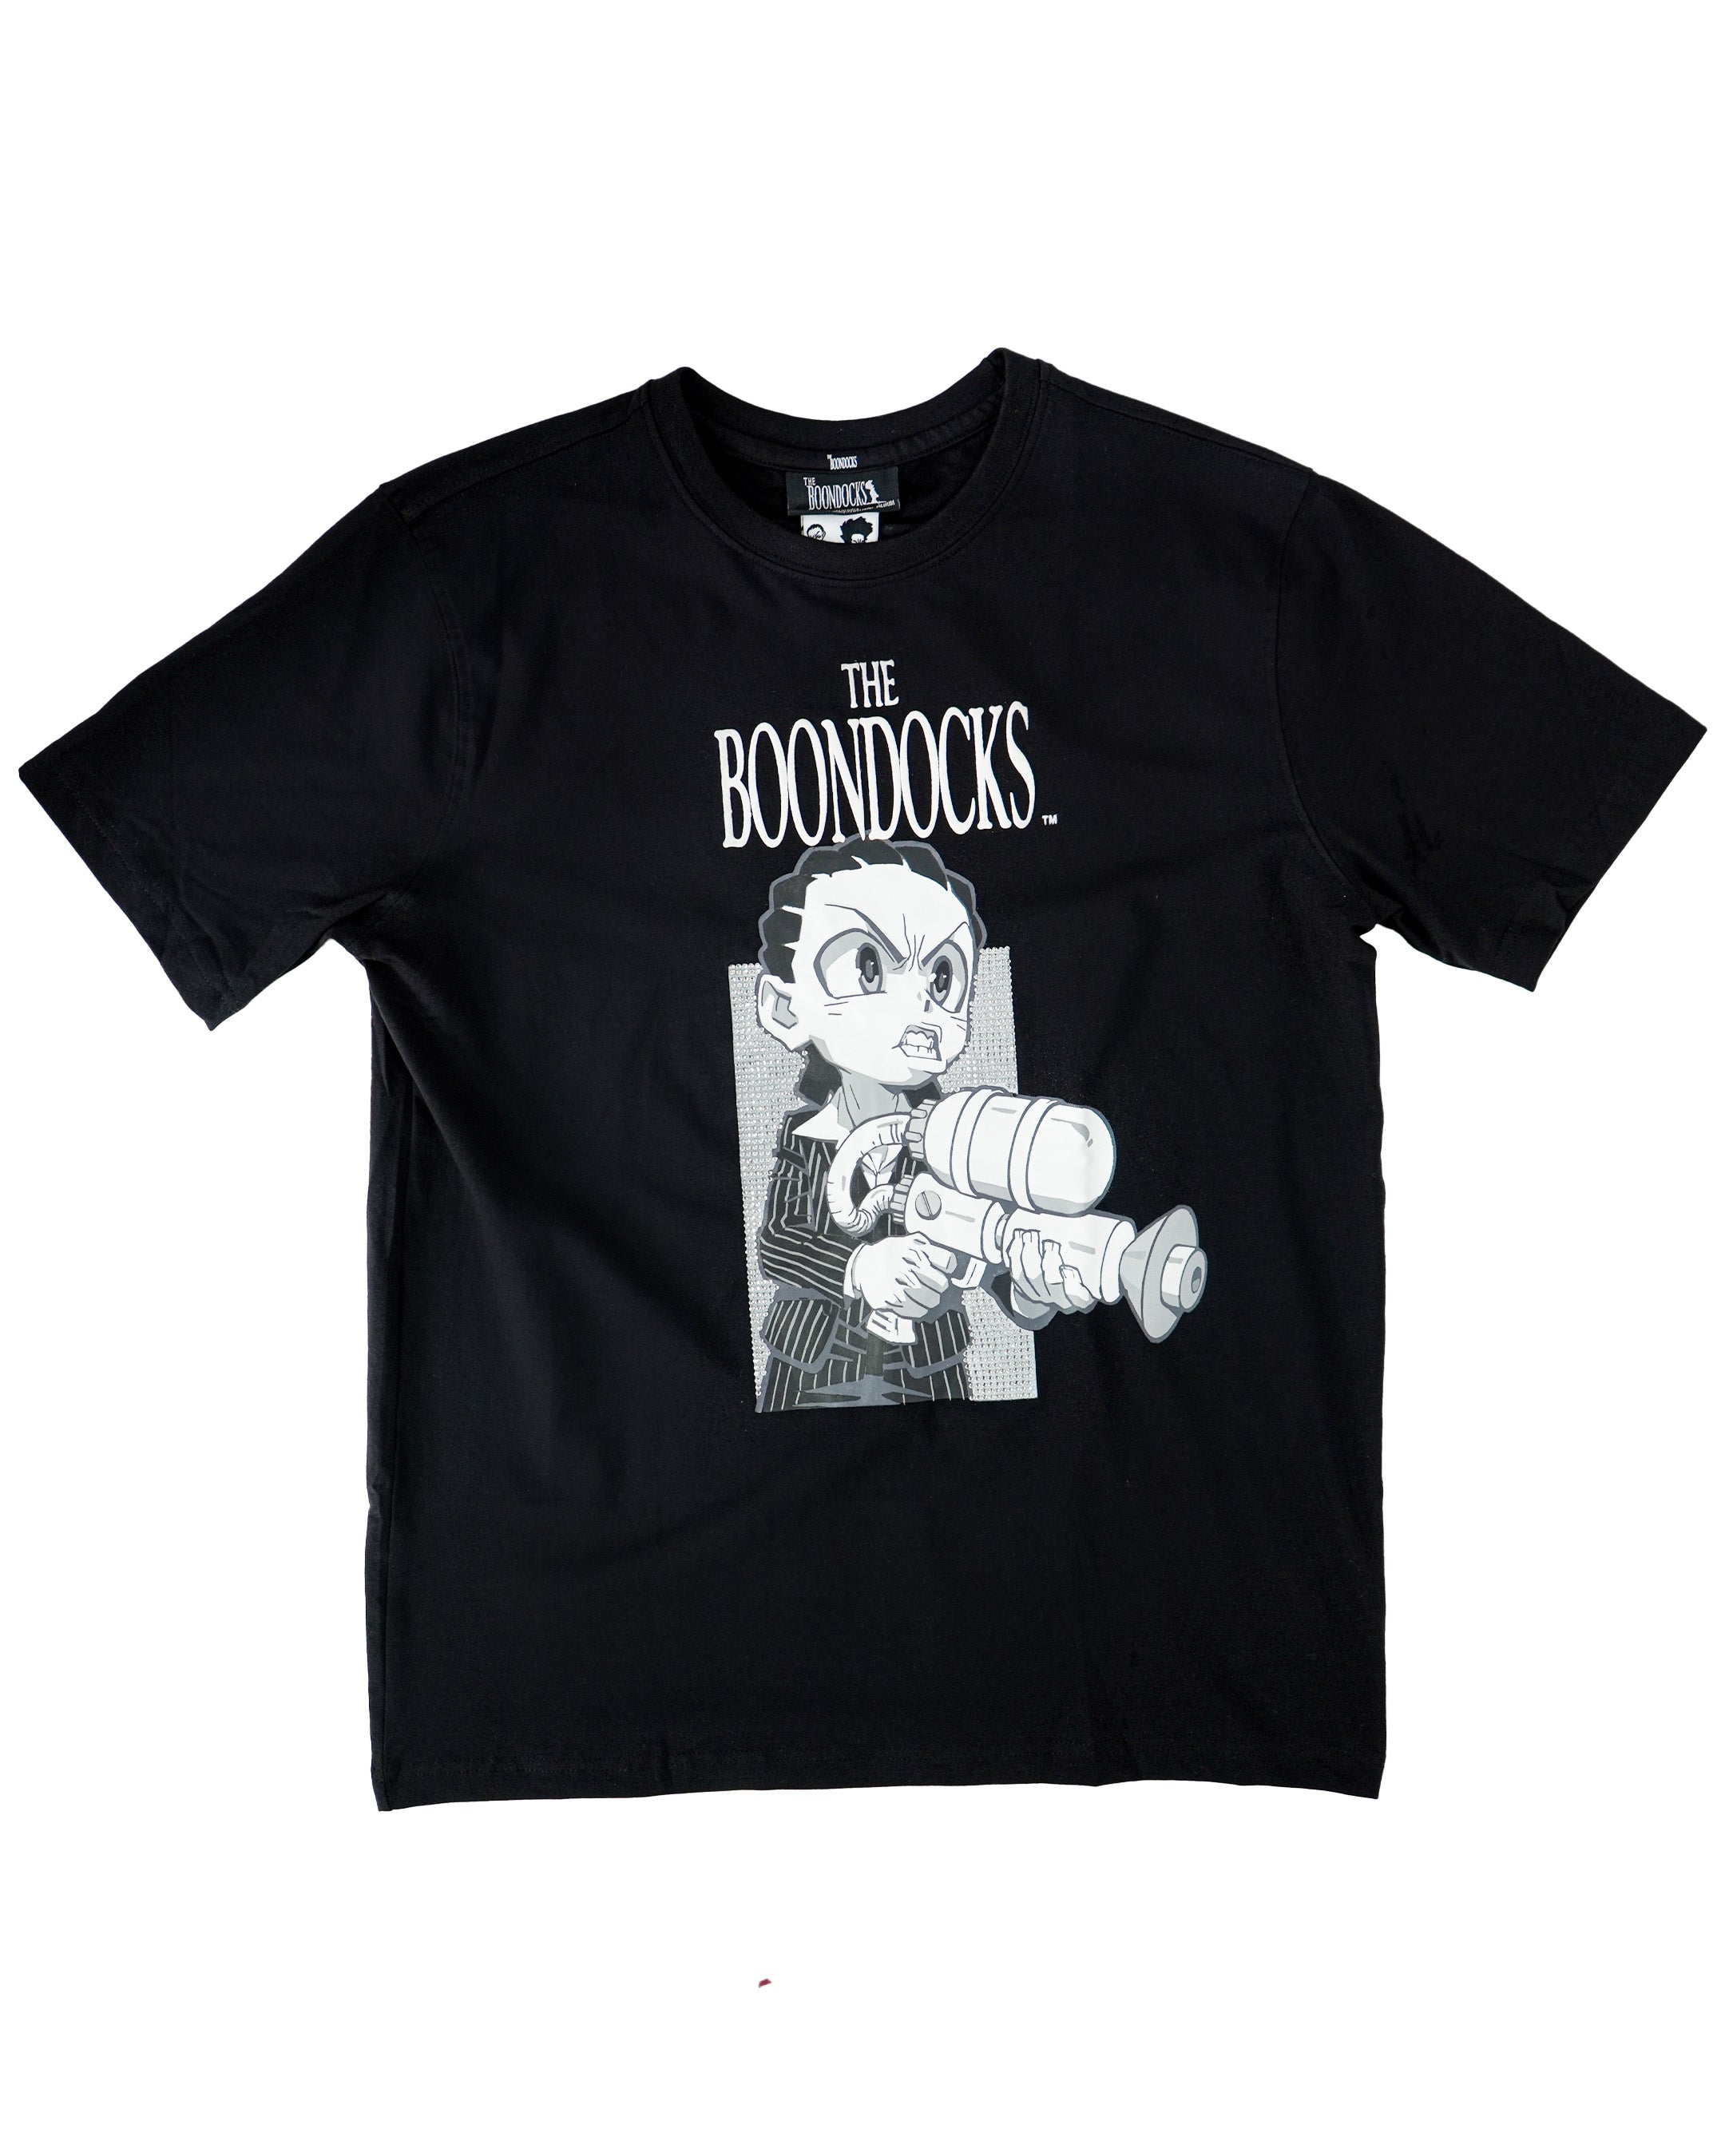 The Boondocks - Riley Say Hello Rhinestoned Black T-Shirt